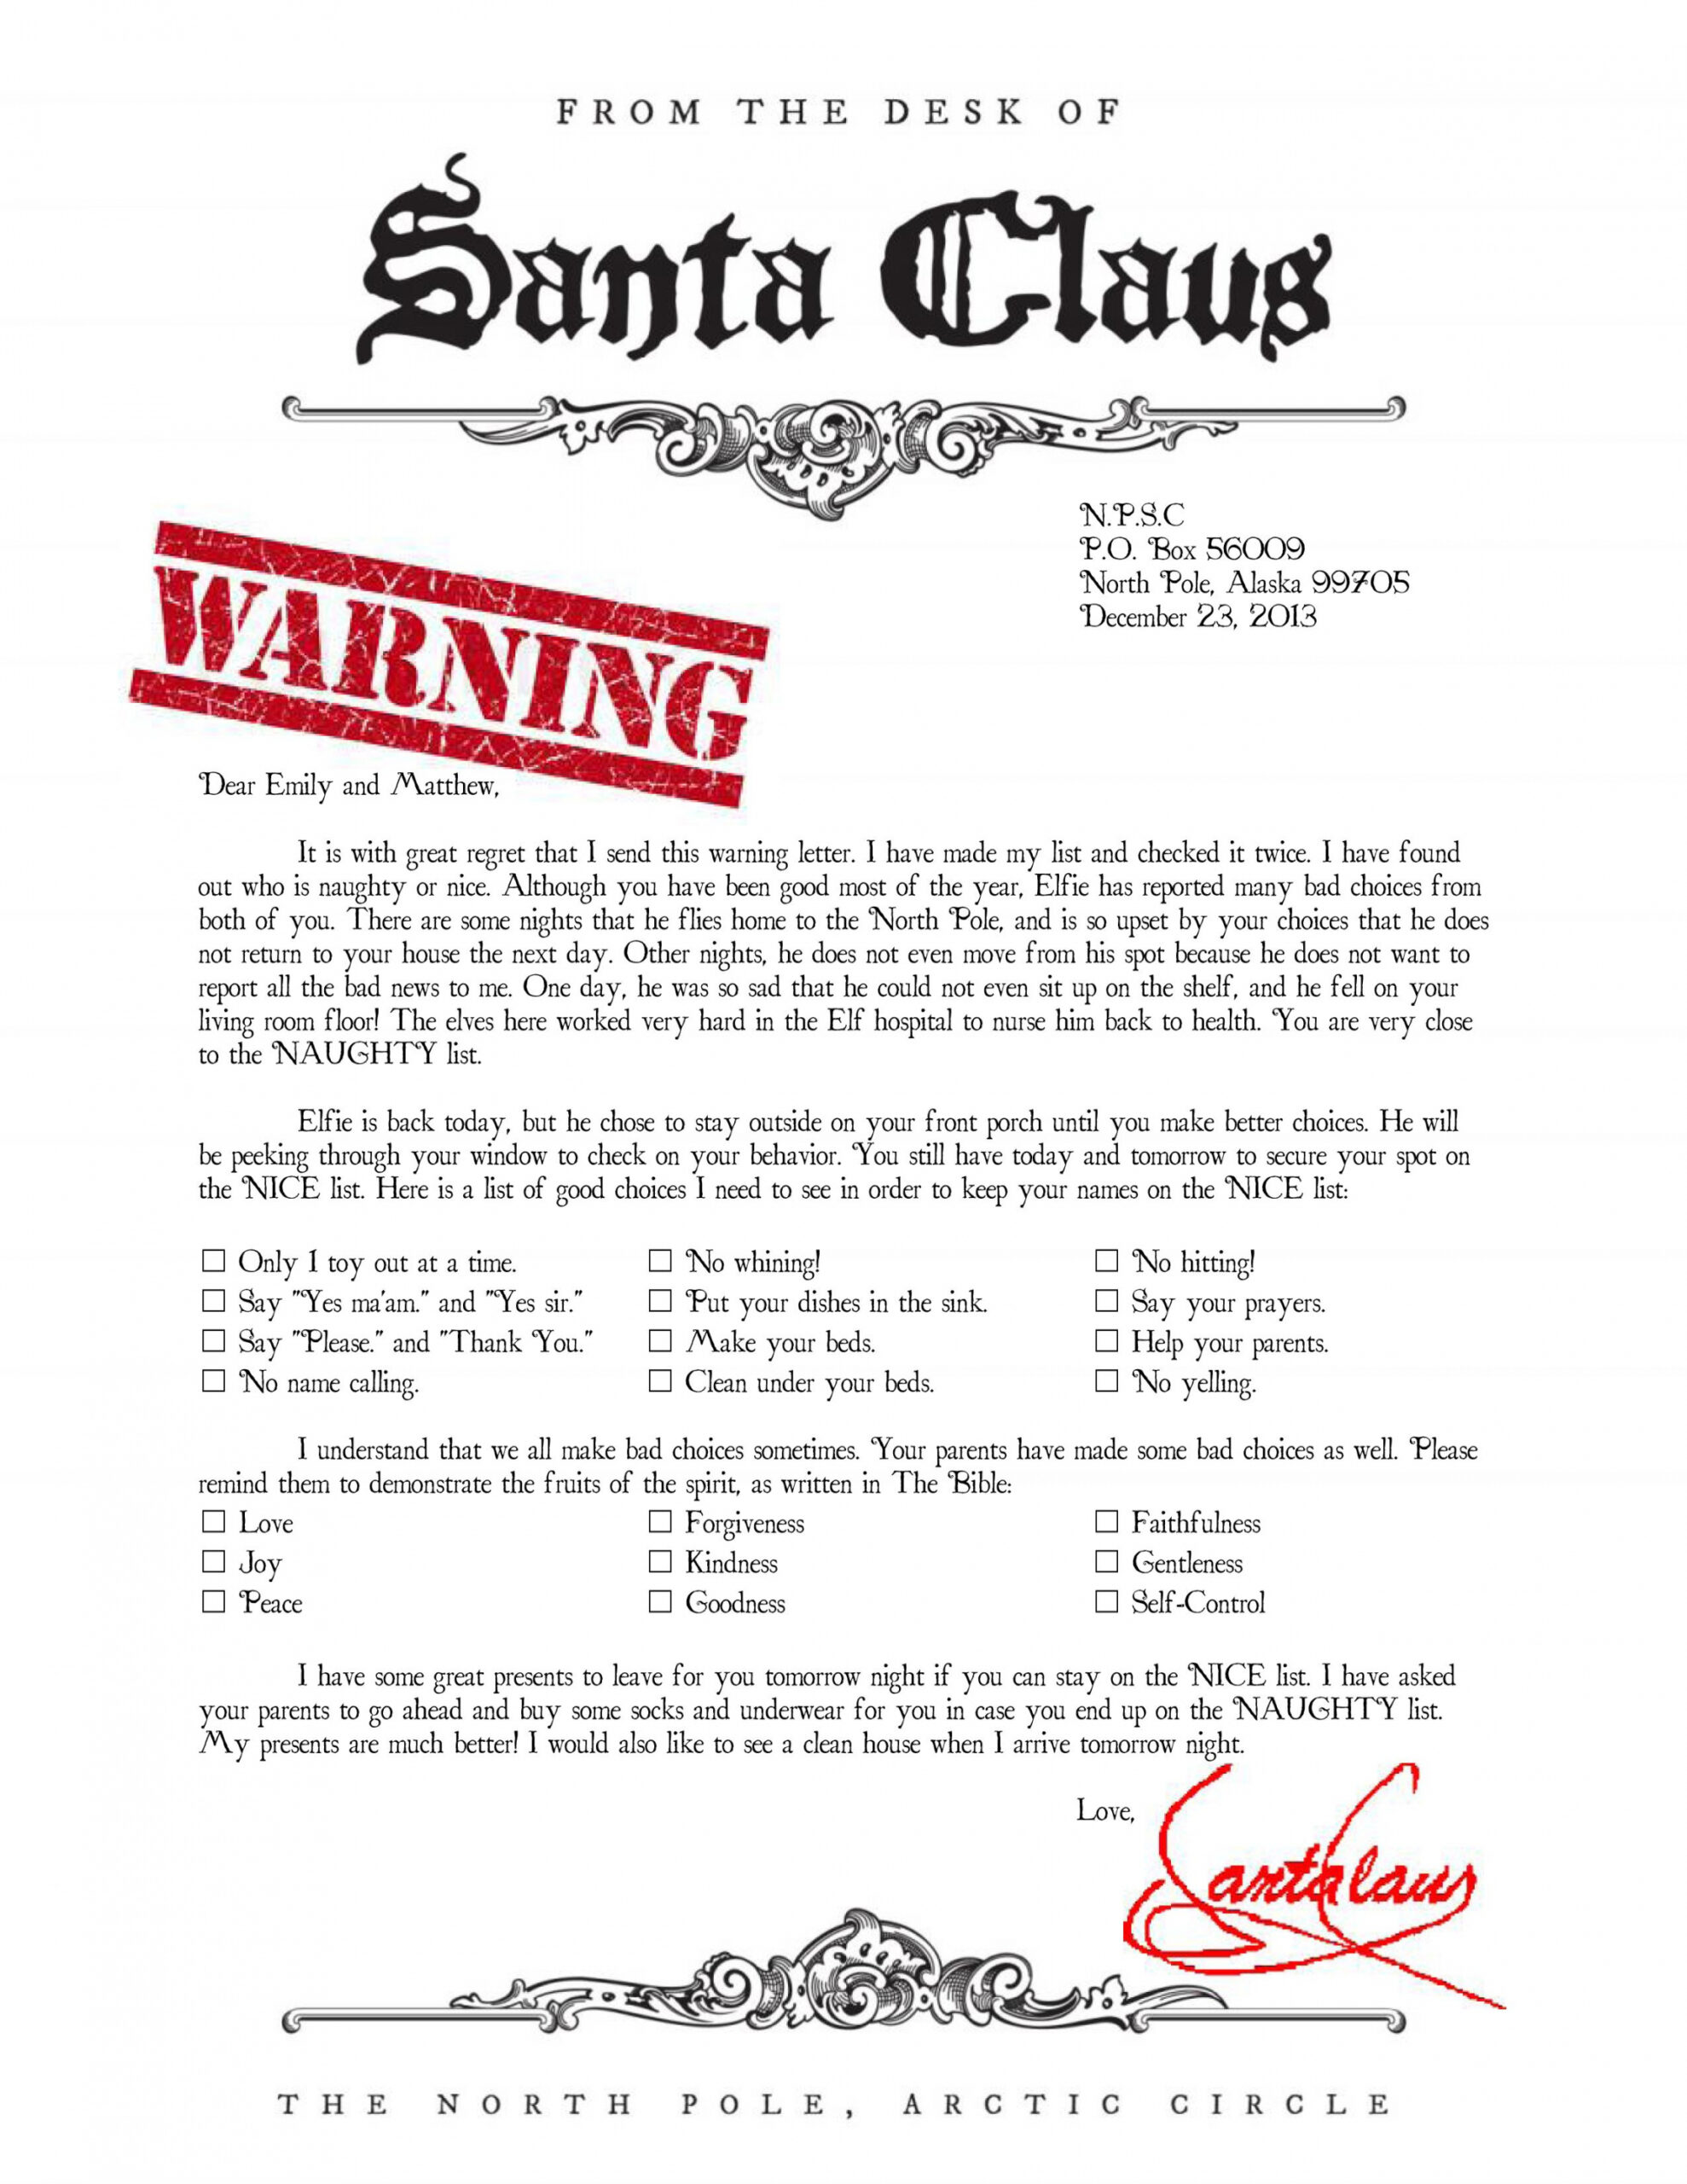 Warning letter from Santa Naught list  Santa letter template  - FREE Printables - Free Printable Warning Letter From Santa